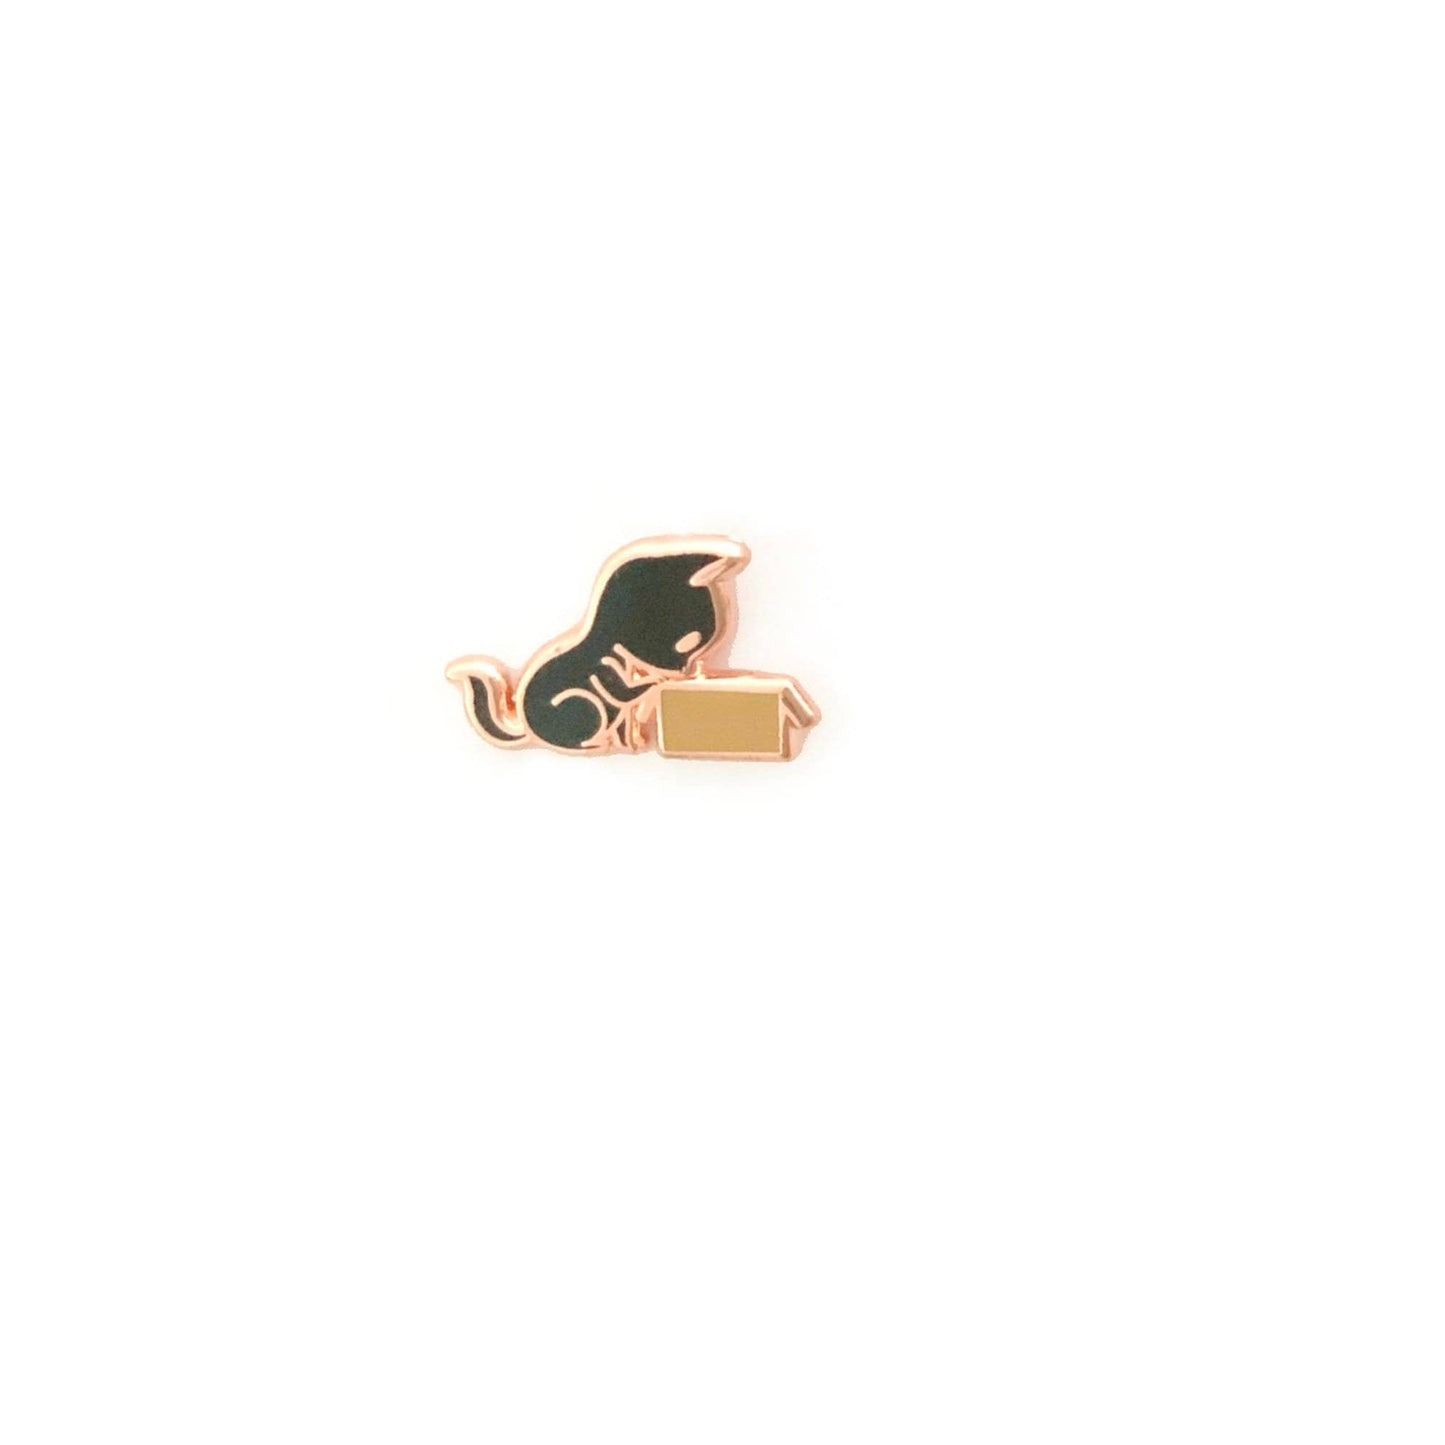 Kitty VS Box - Tiny Enamel Pin Set of 4, Black Cat Pin, Pins, Brooches & Lapel Pins